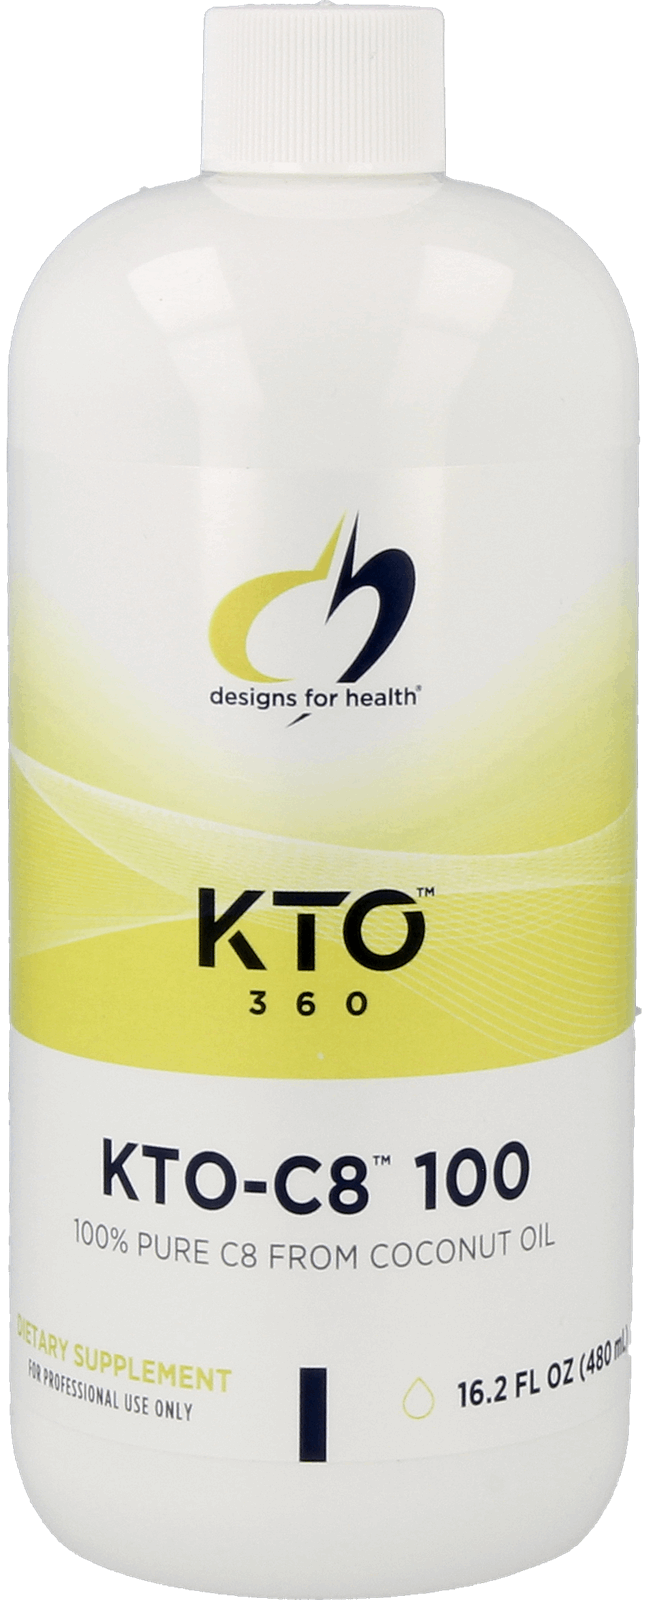 KTO-C8™ 100 